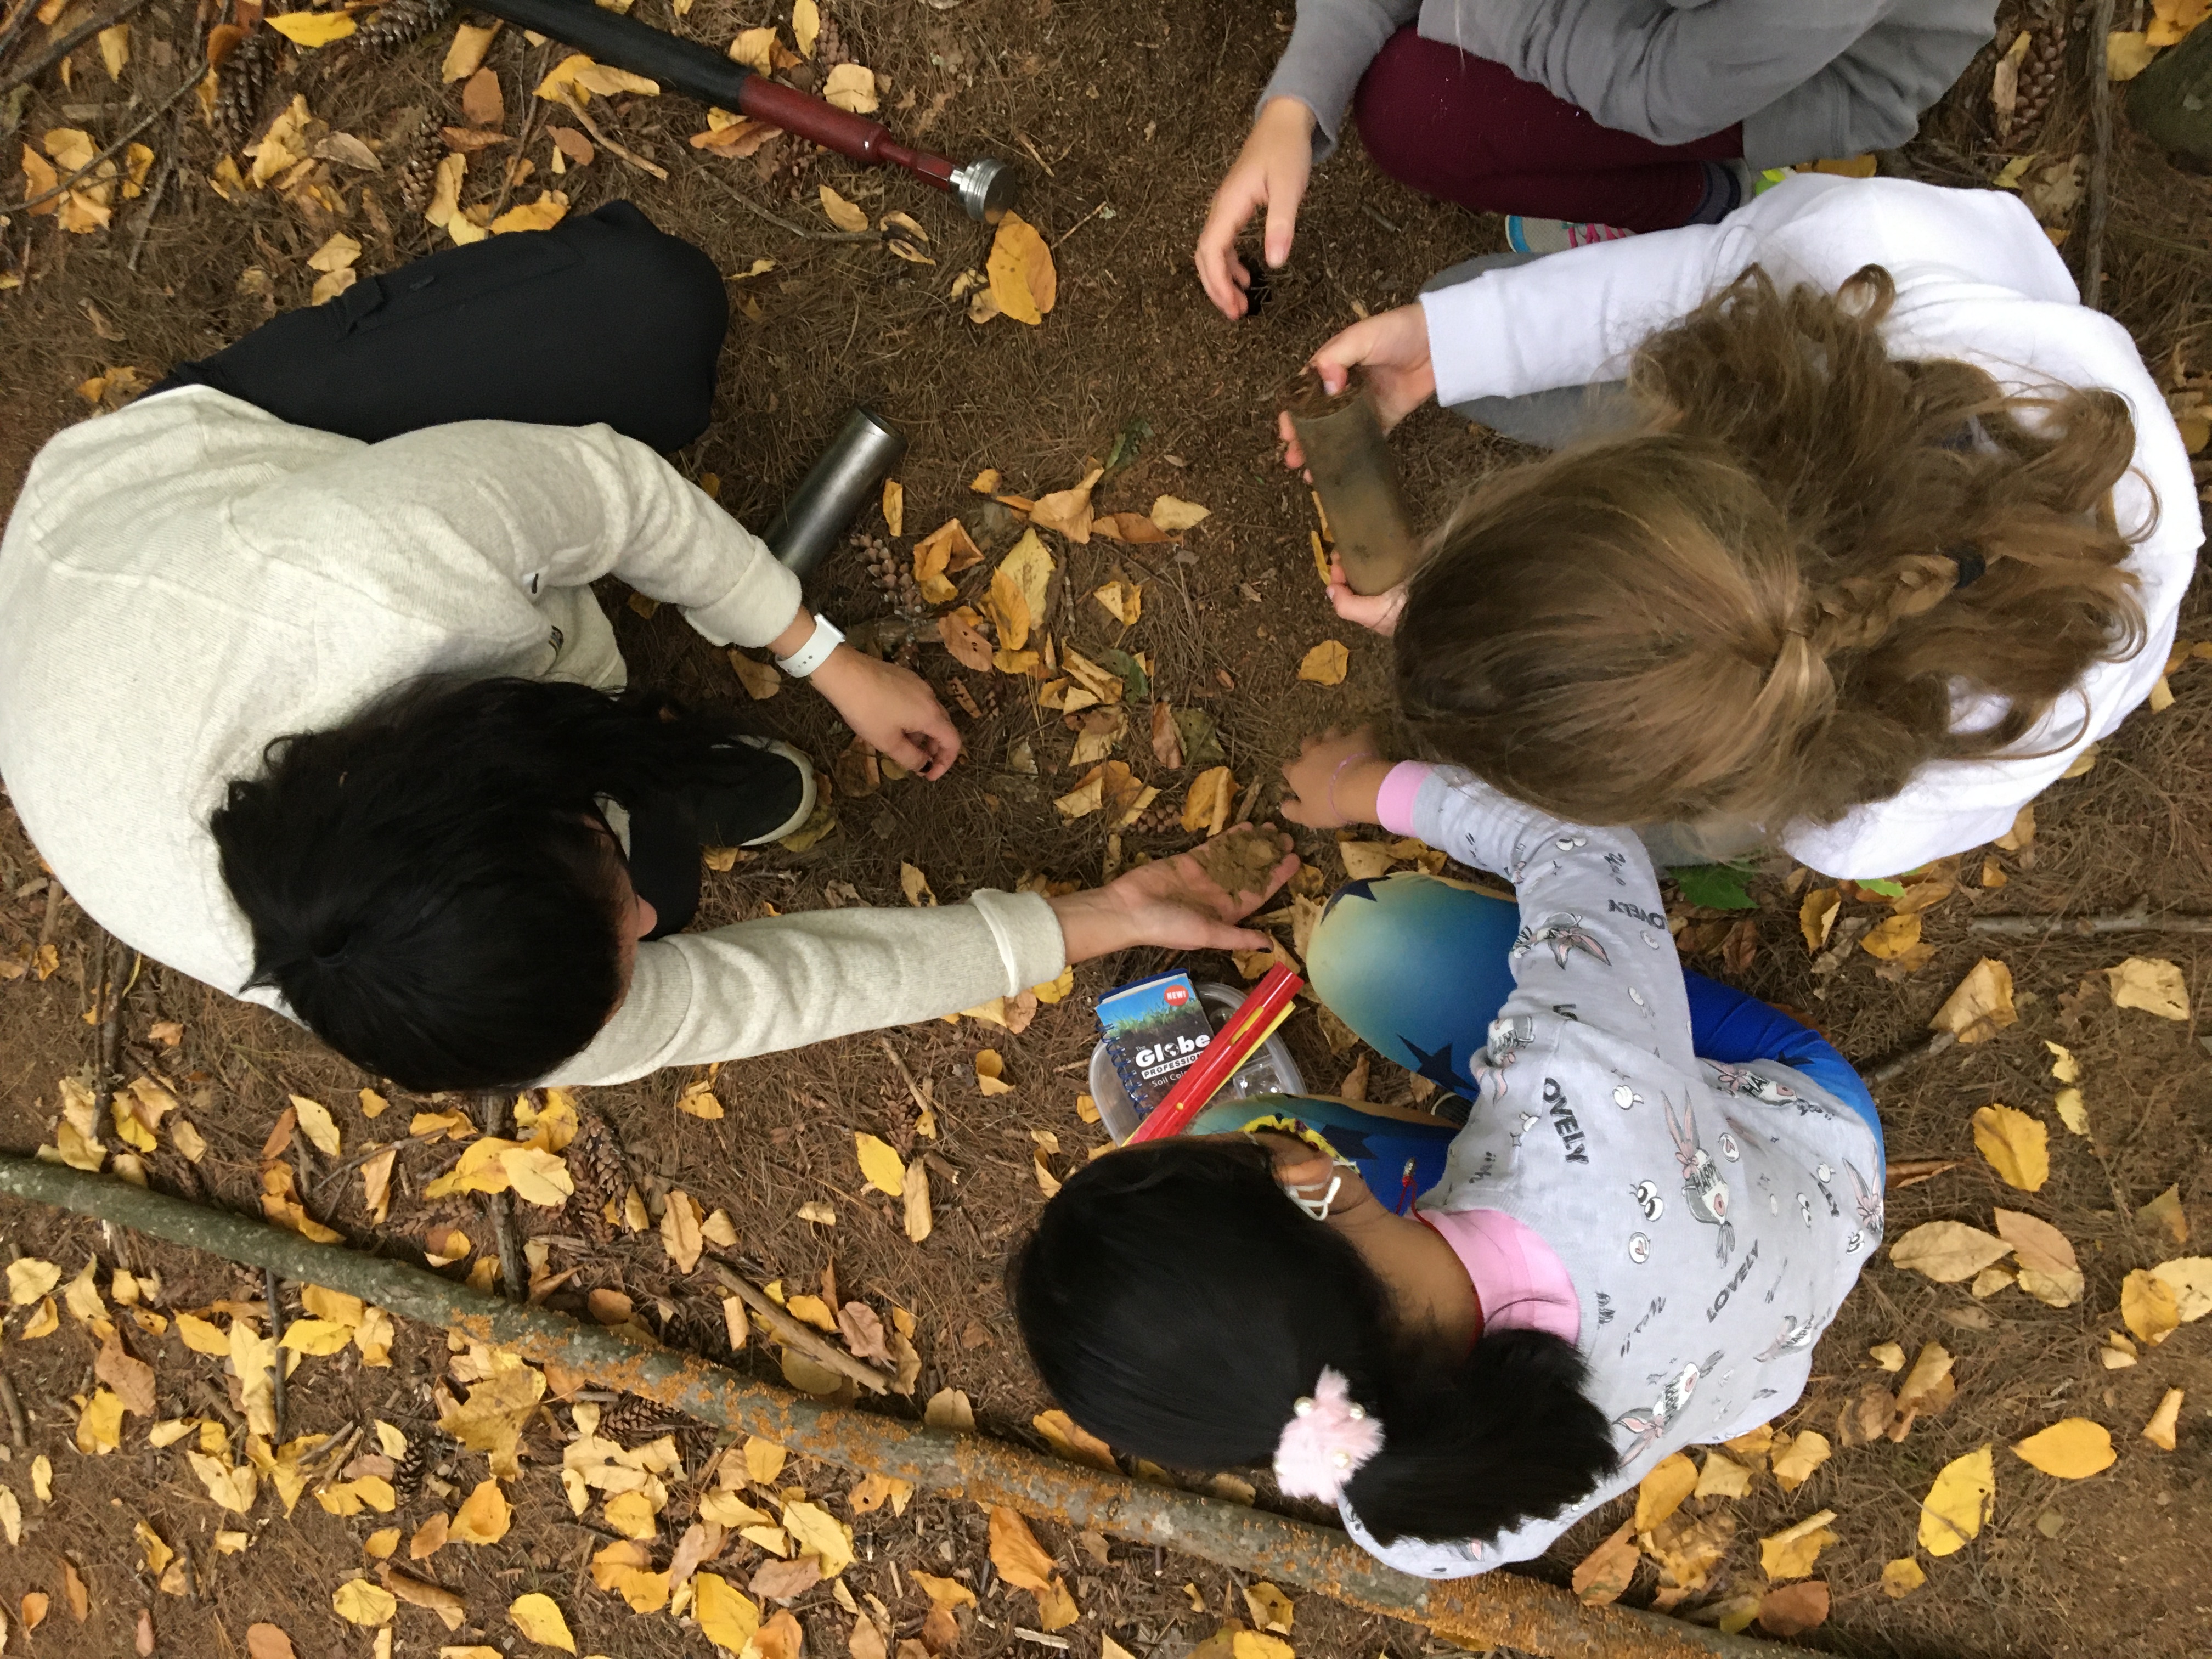 Students explore soils with graduate student Joy